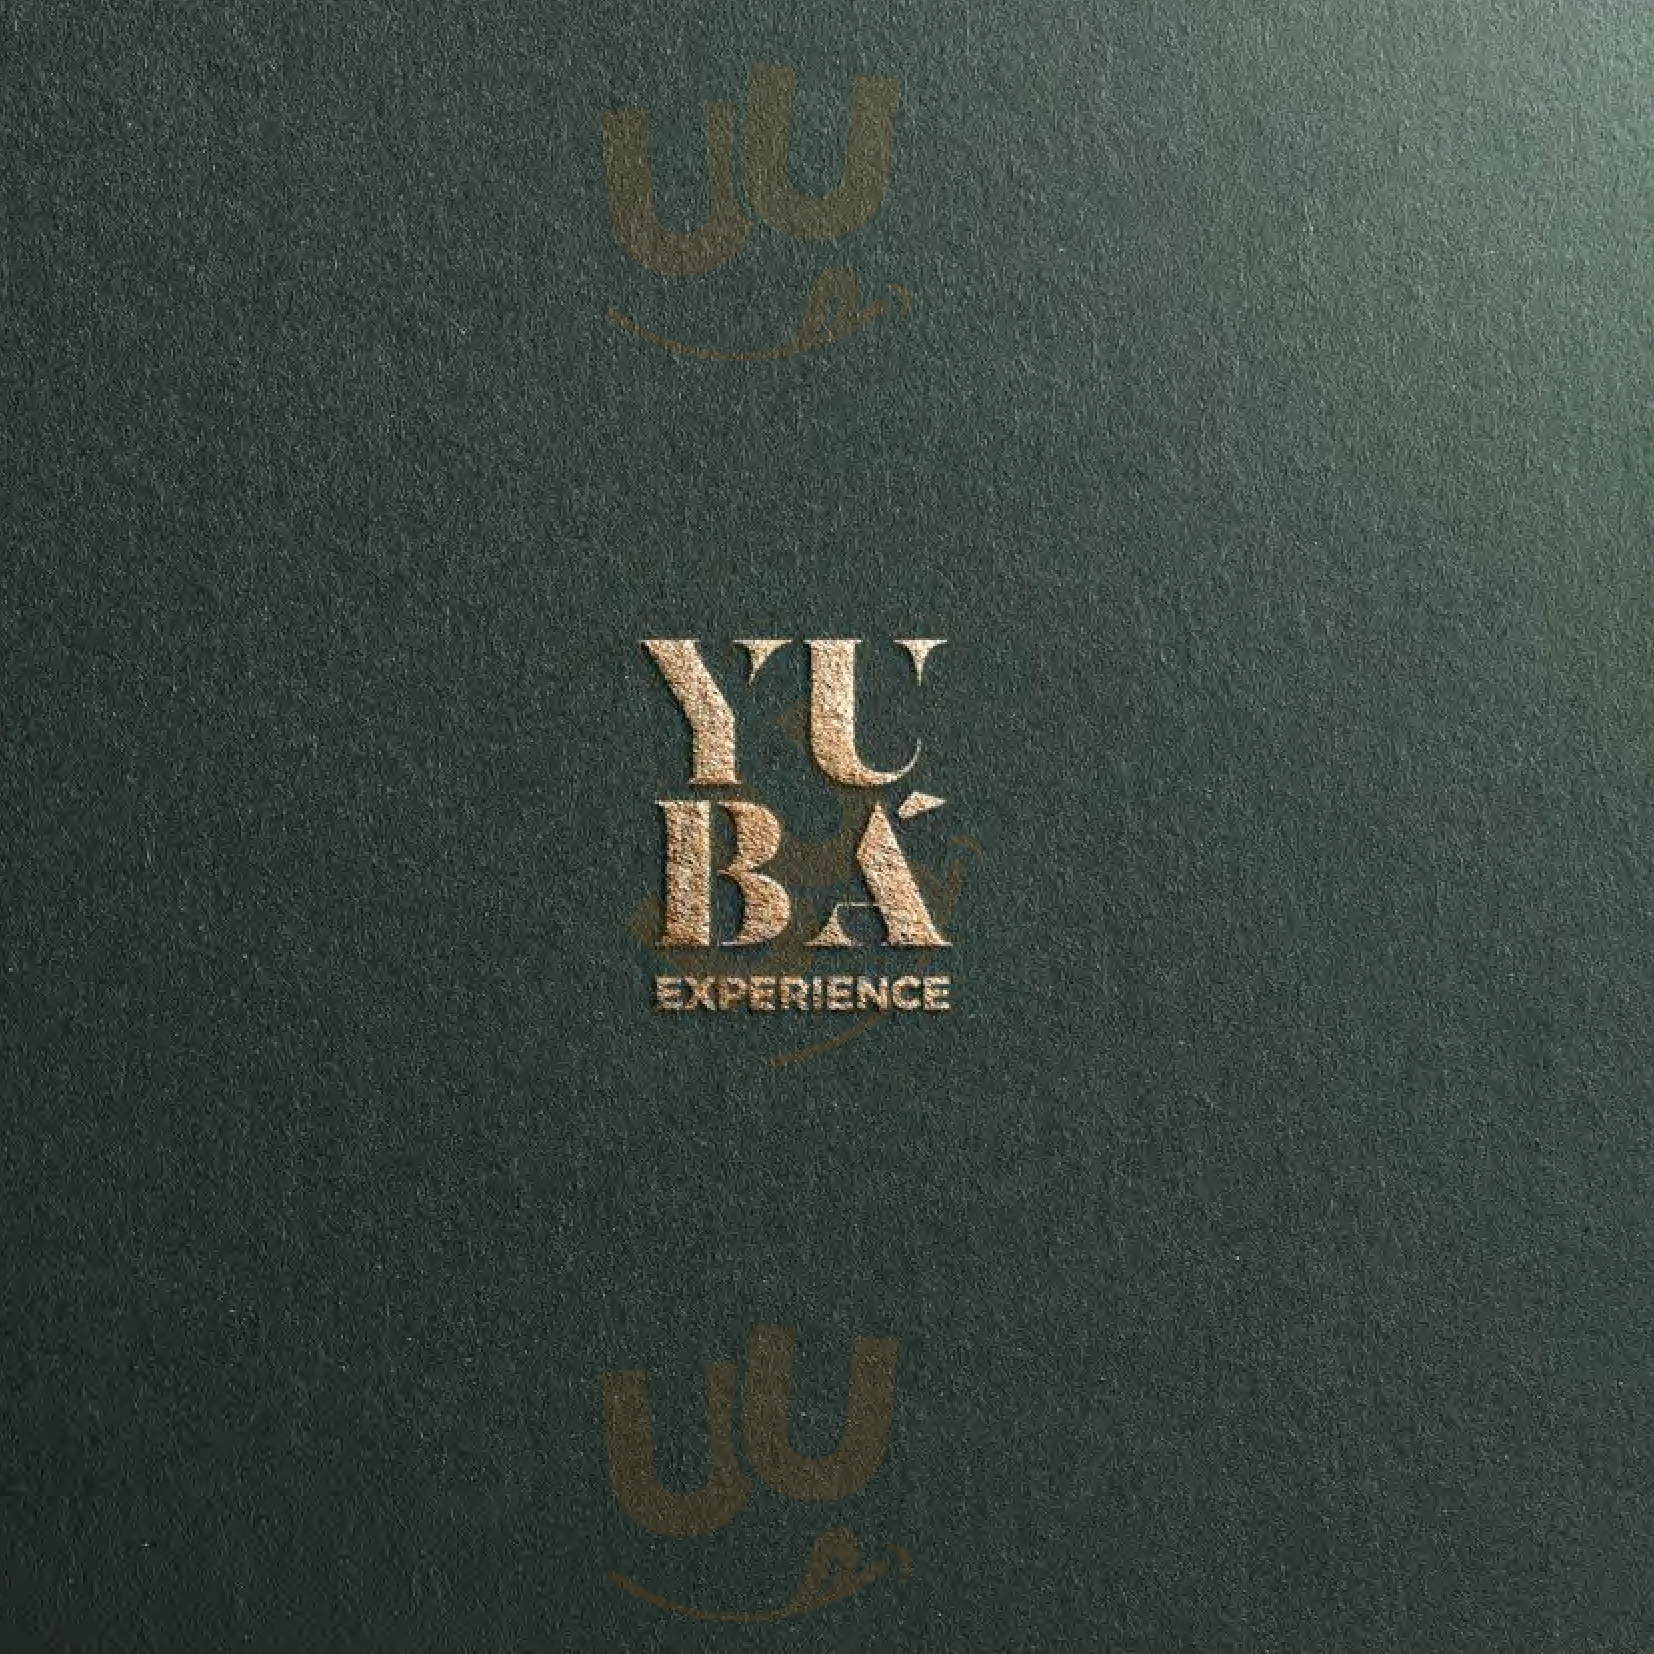 Yubá Experience Málaga Menu - 1